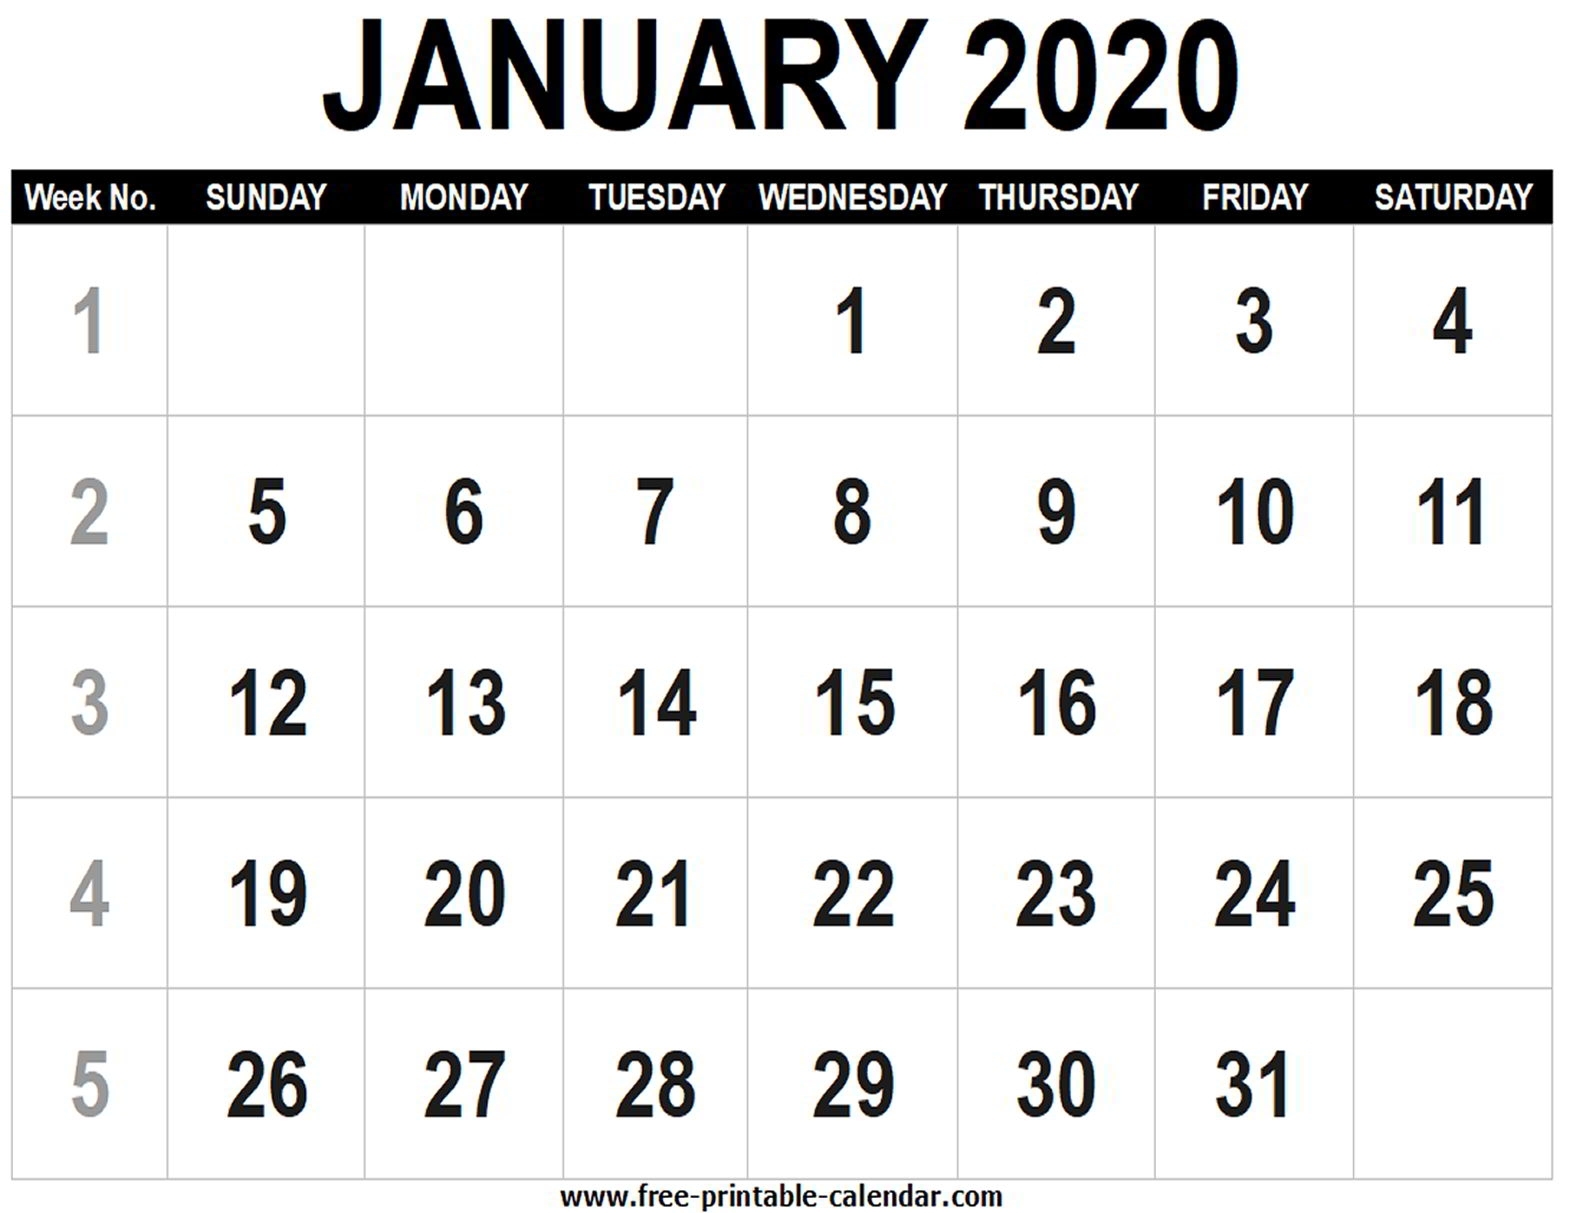 Blank Calendar 2020 January - Free-Printable-Calendar